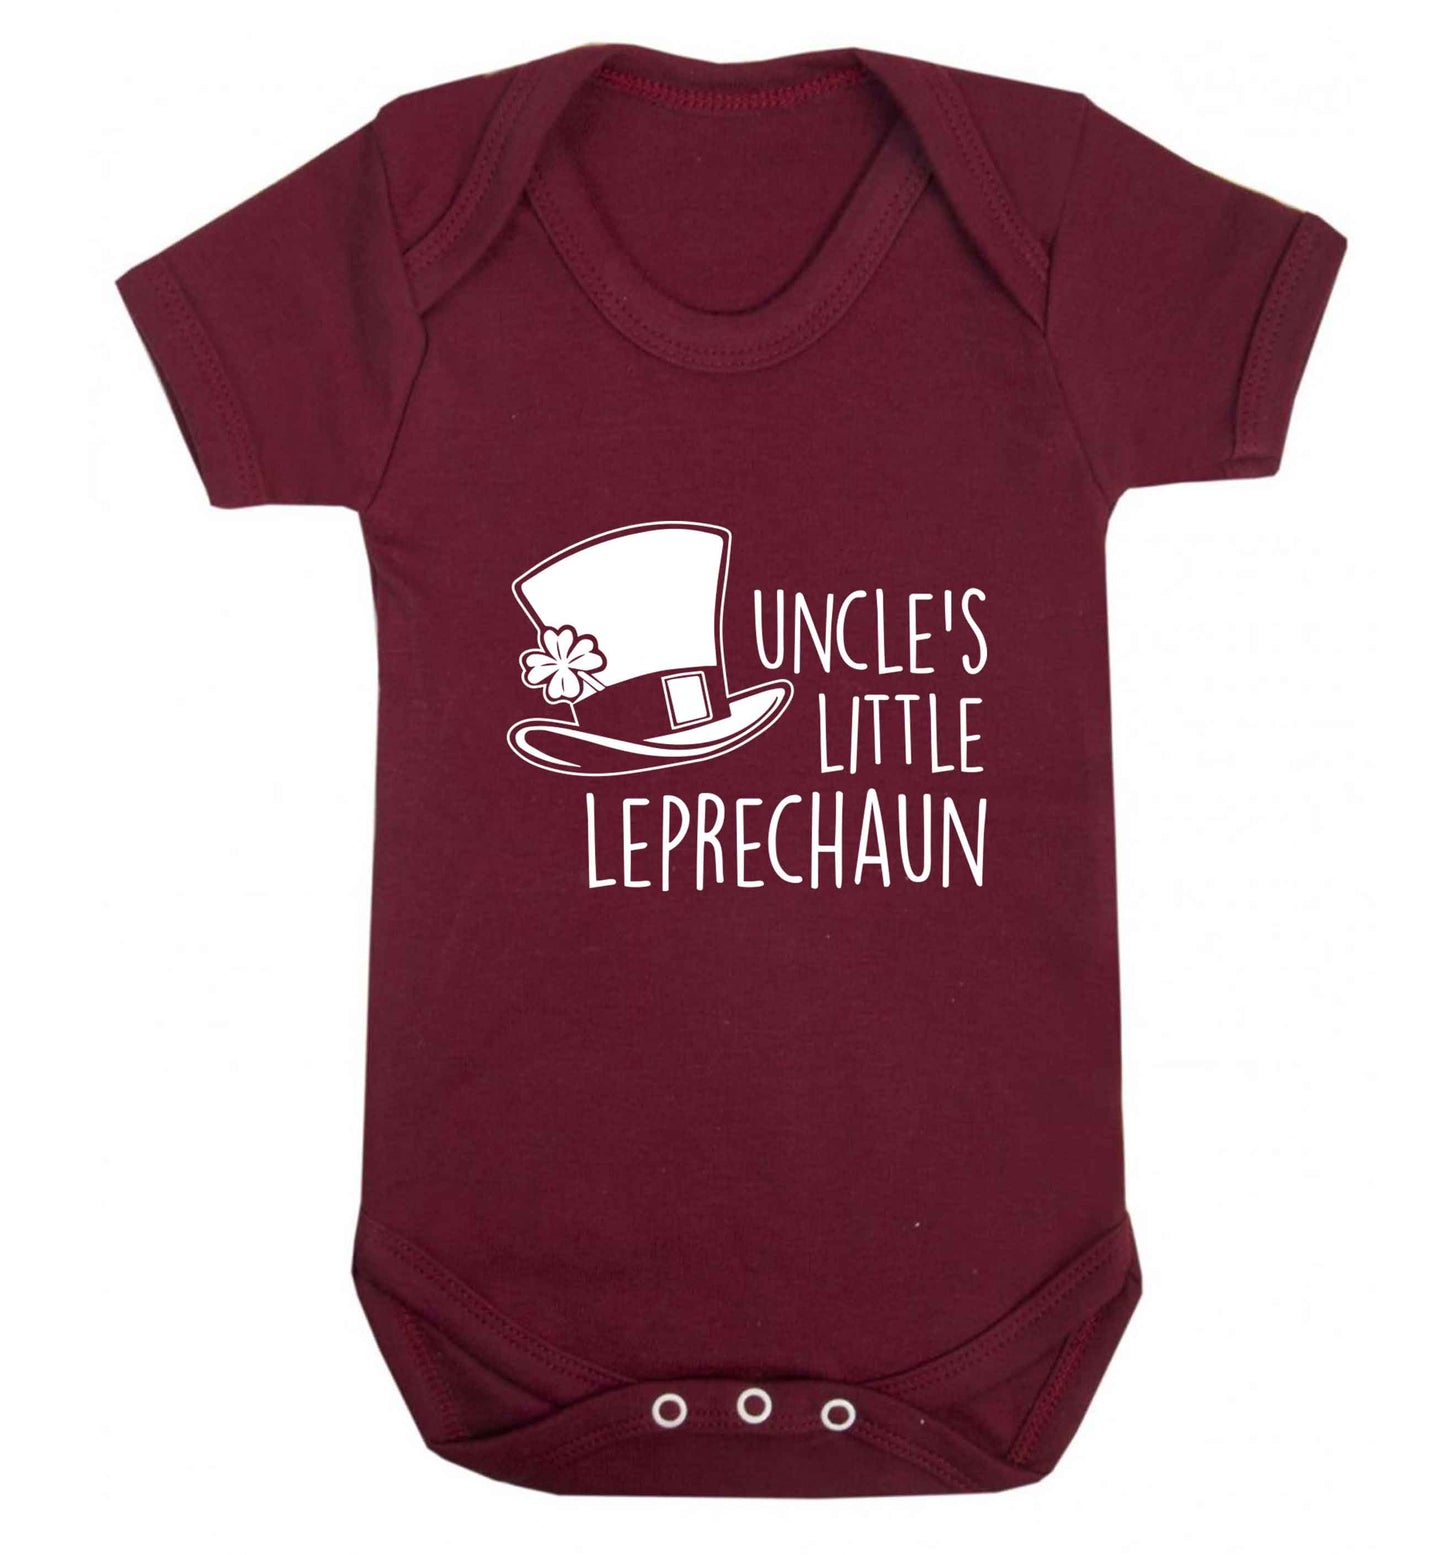 Uncles little leprechaun baby vest maroon 18-24 months